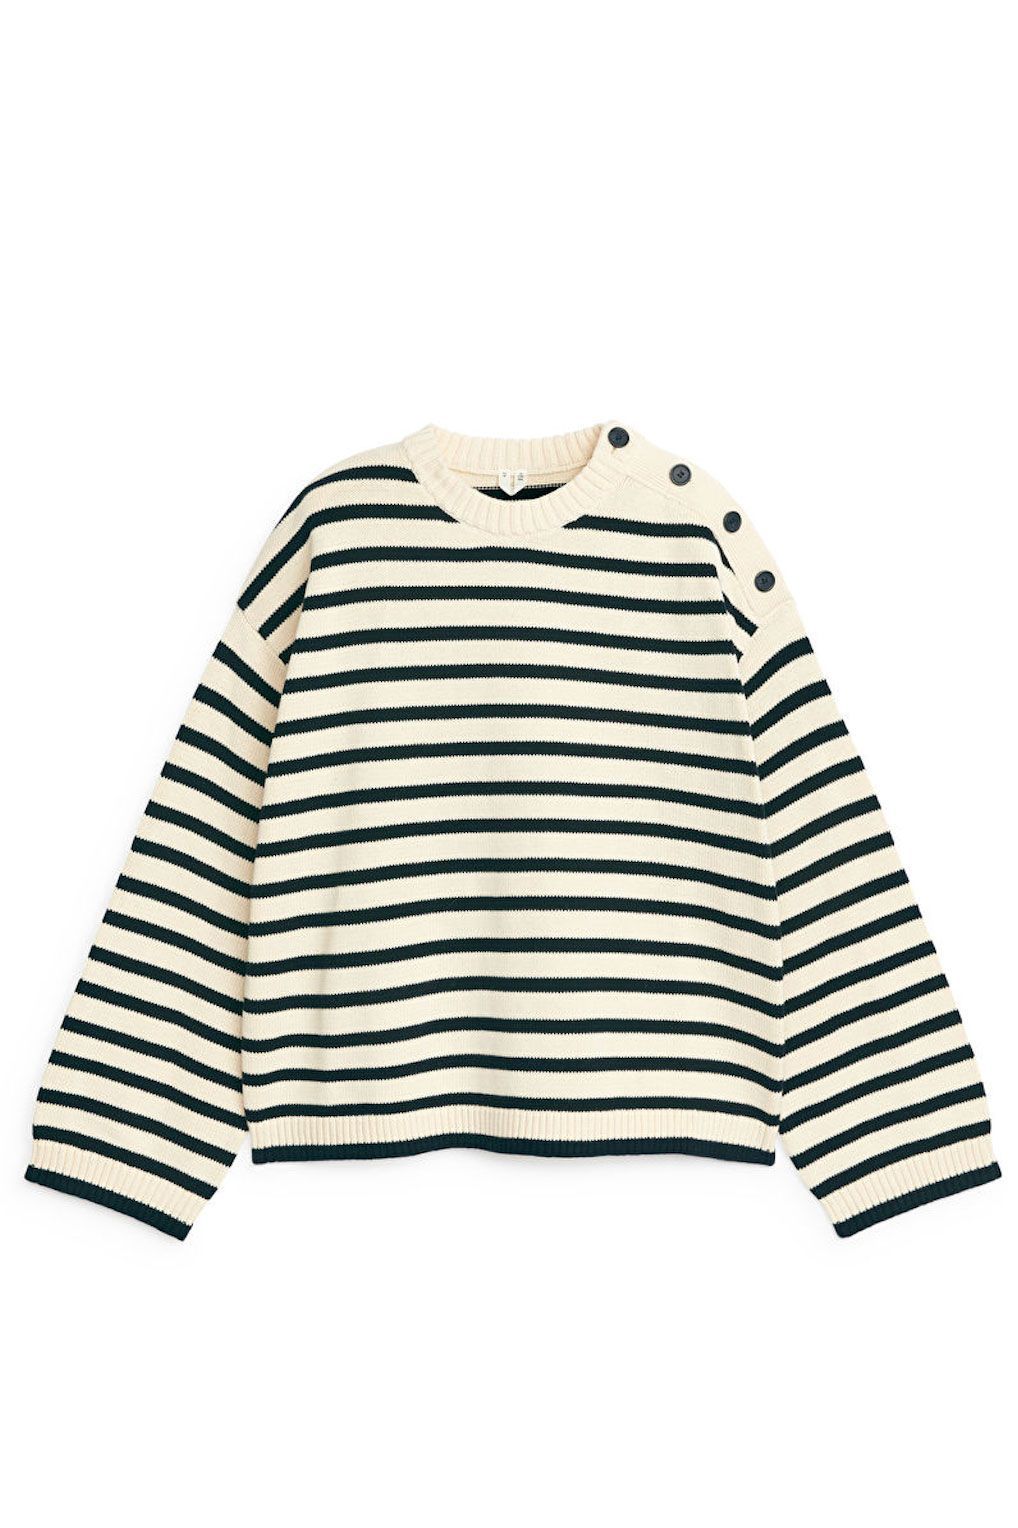 M&S' £25 striped jumper is a true wardrobe staple